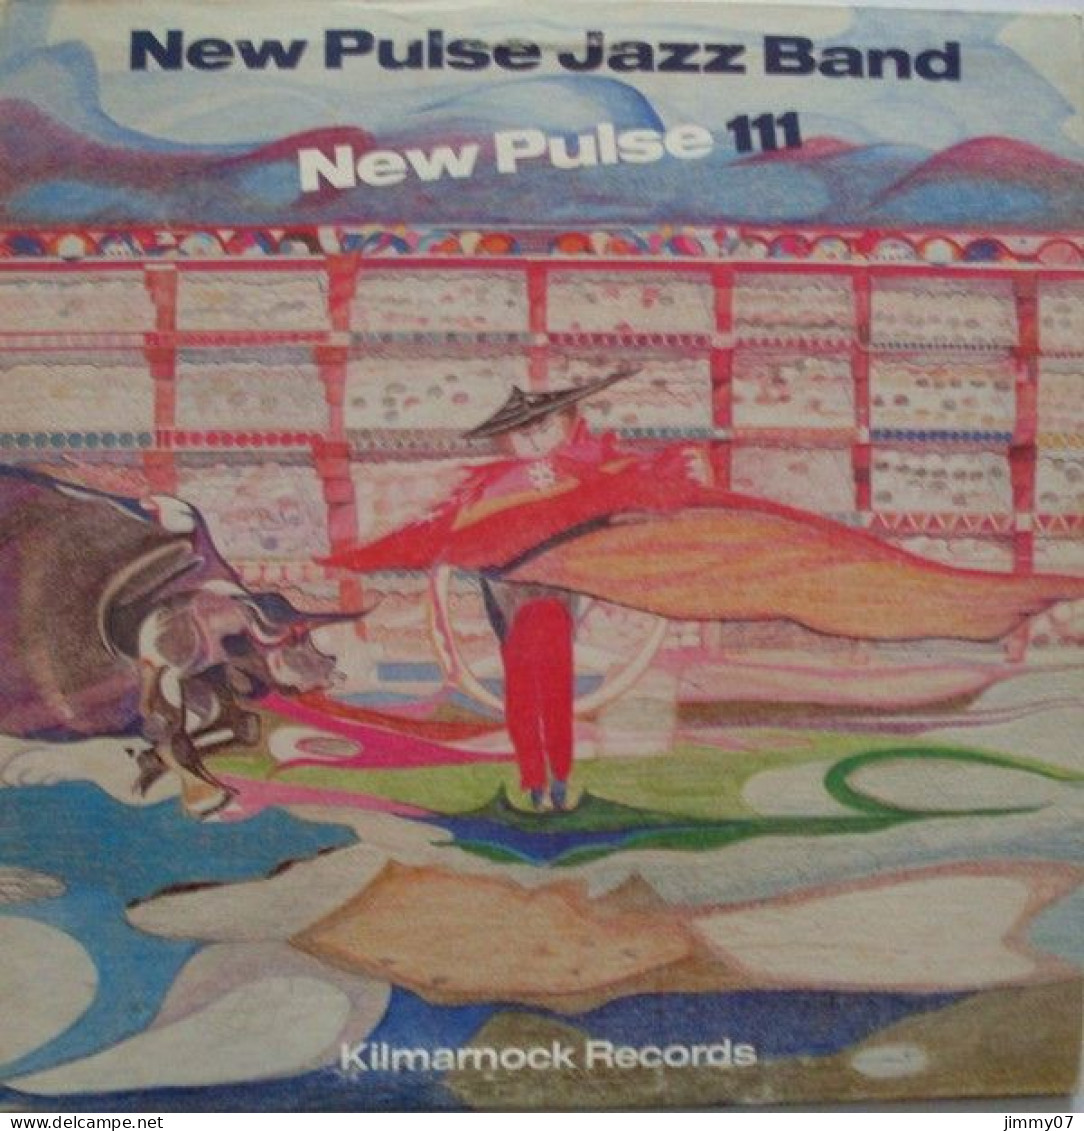 New Pulse Jazz Band - New Pulse 111 (LP, Album) - Jazz